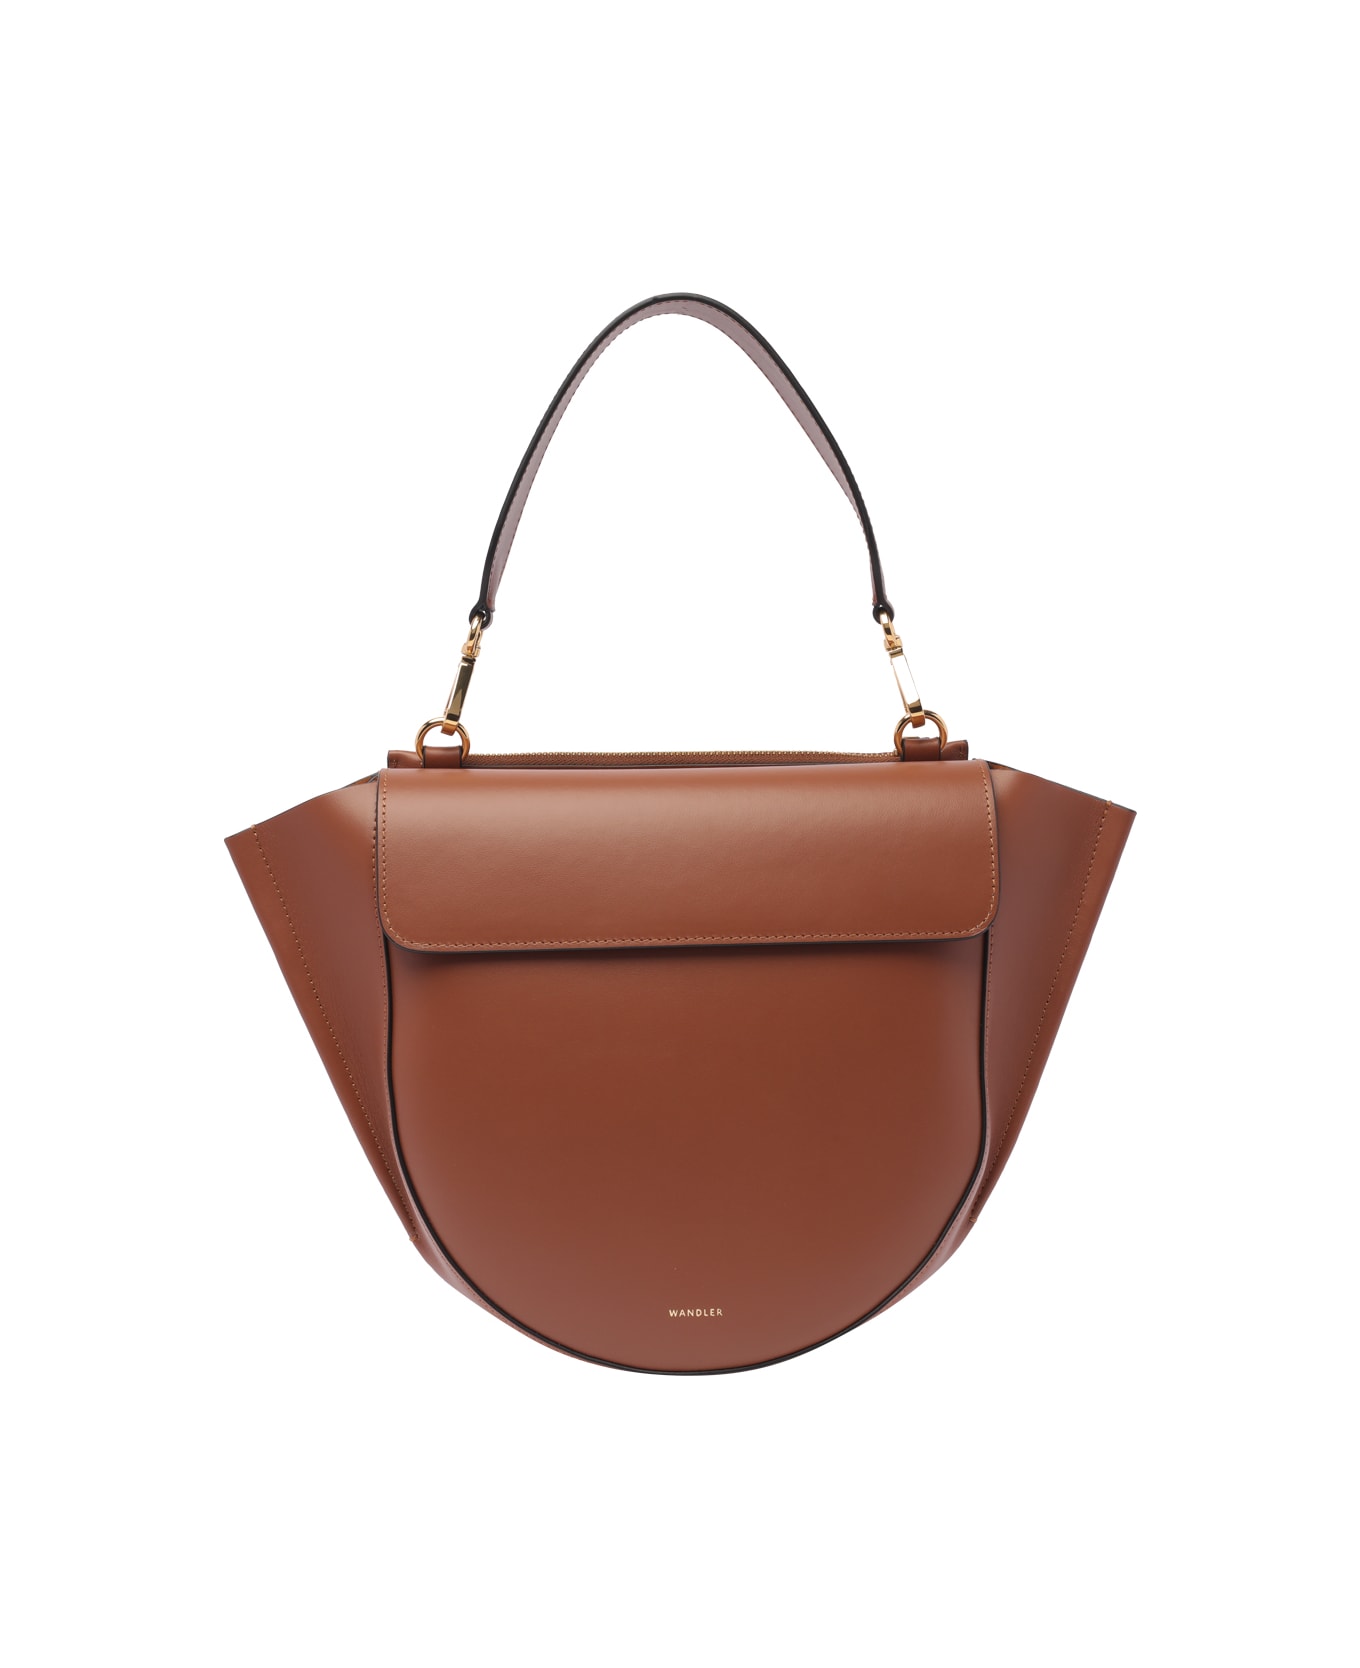 Wandler Medium Hortnesia Handbag - Brown